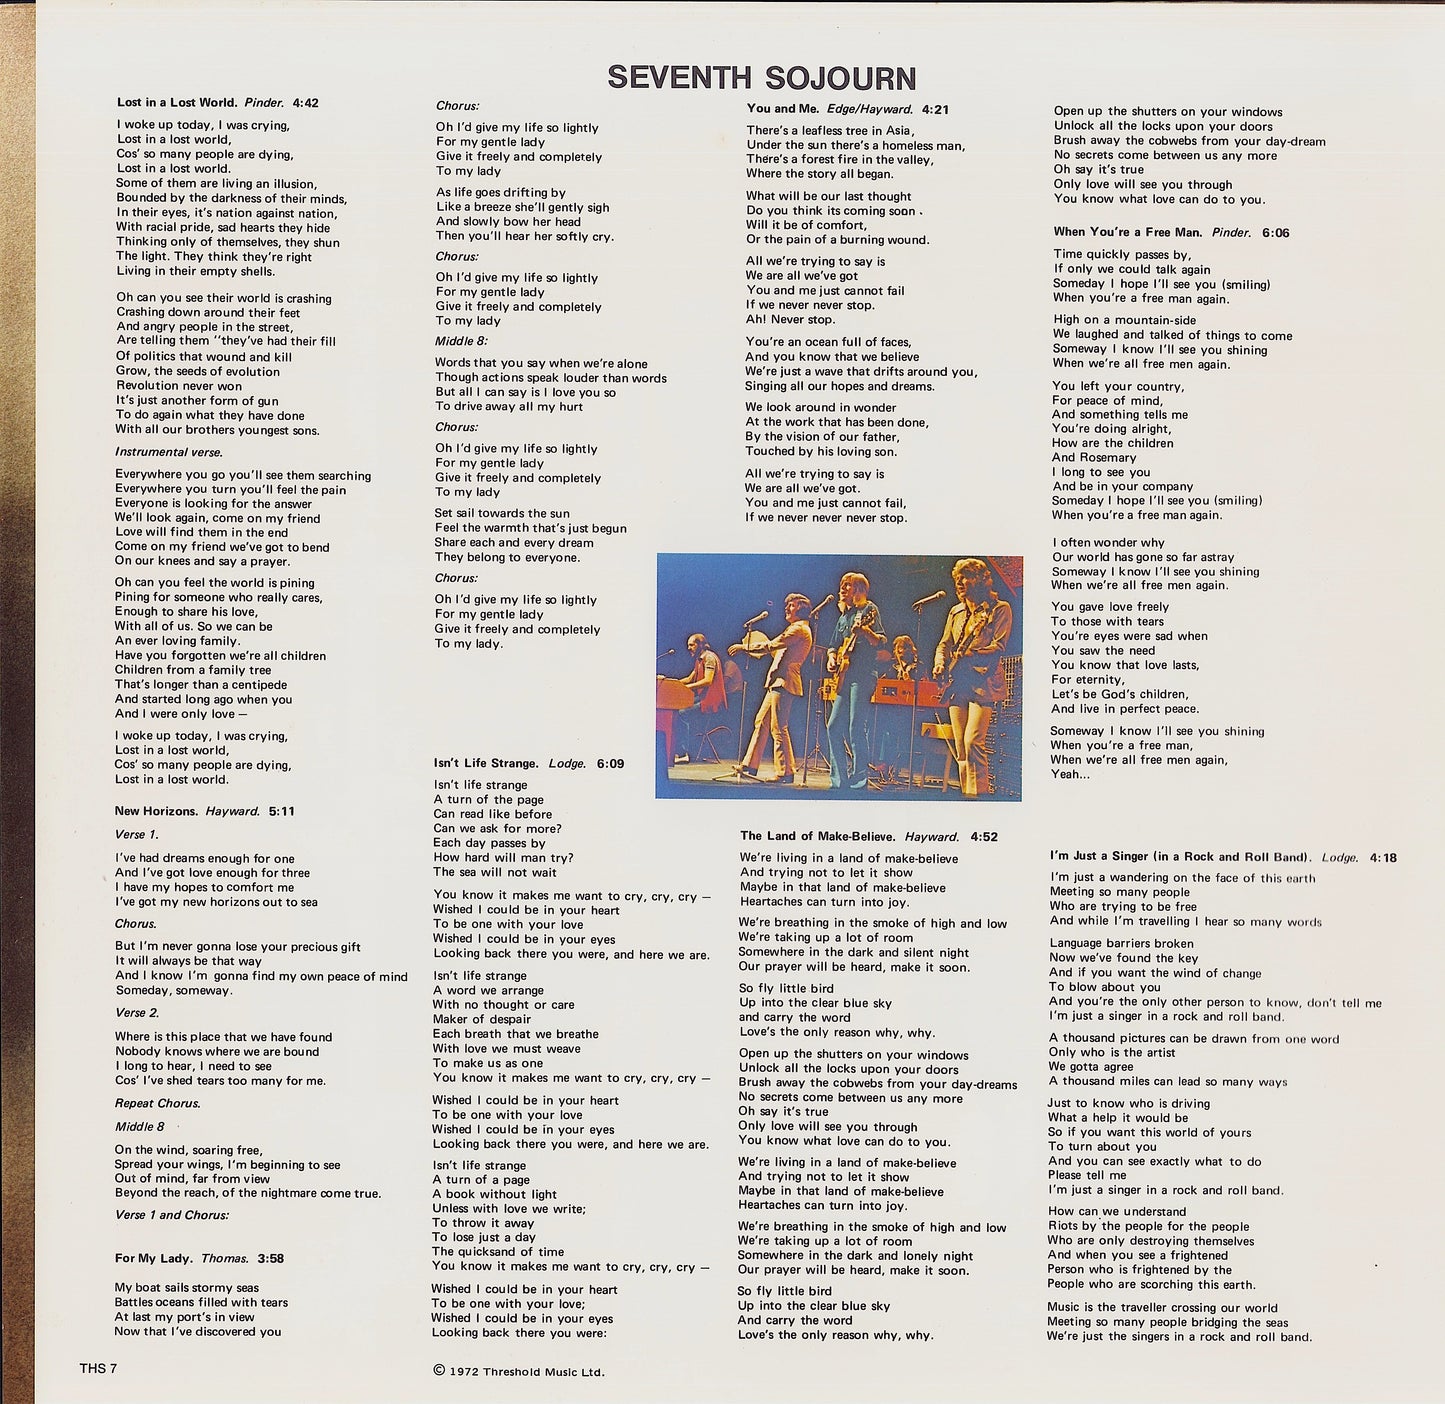 The Moody Blues ‎- Seventh Sojourn Vinyl LP